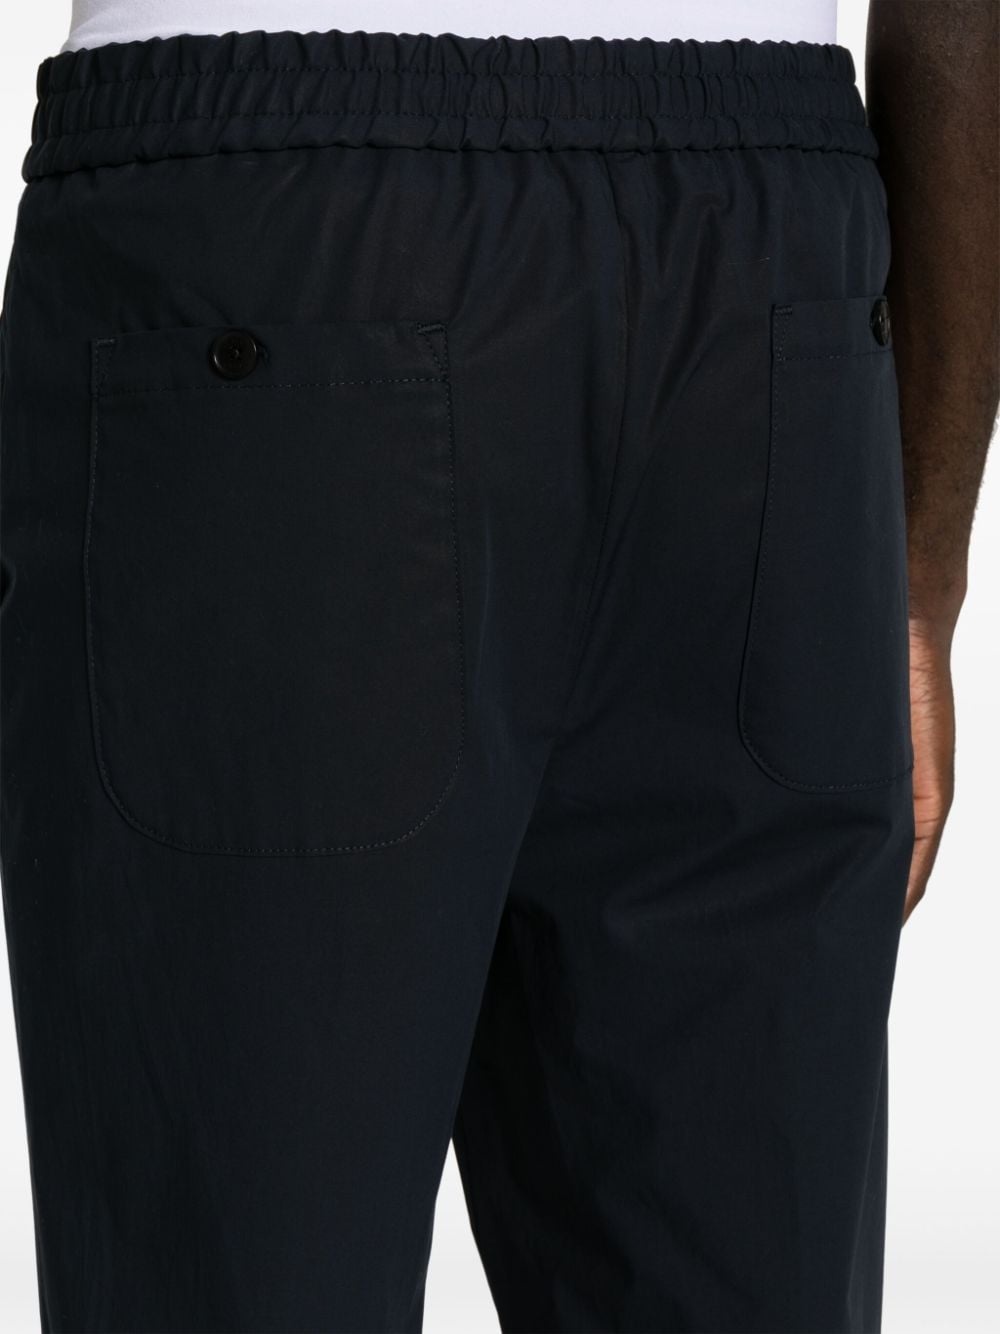 press-crease cotton trousers - 5